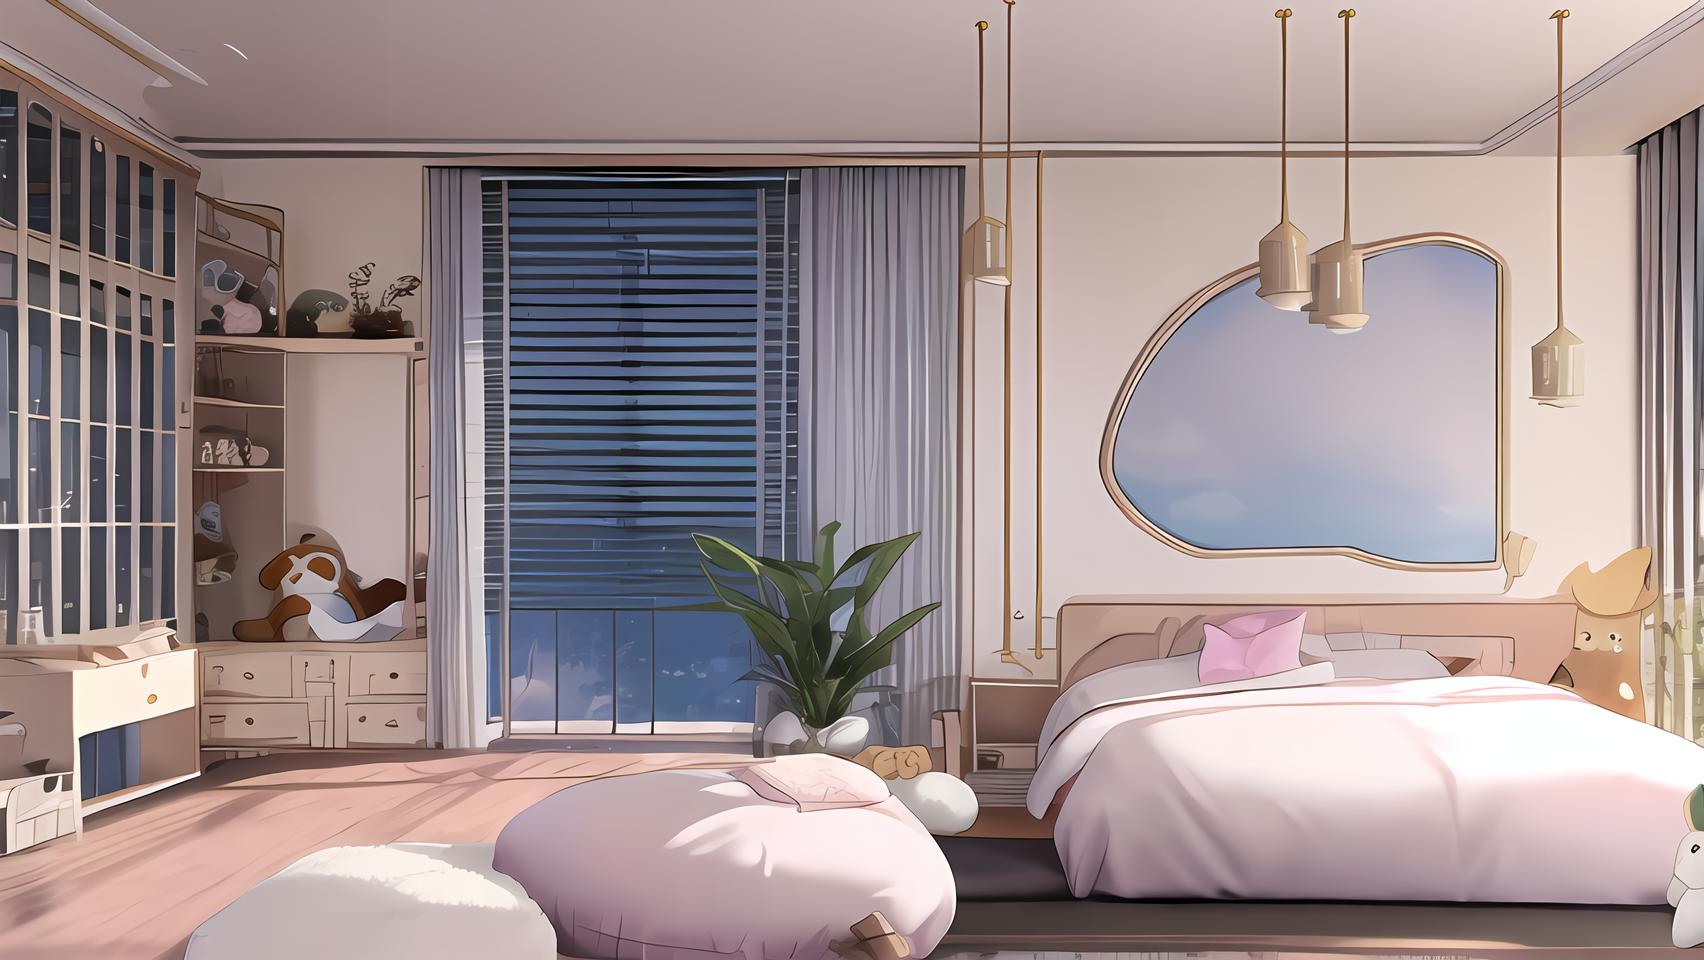 ArtStation - Anime Bedroom